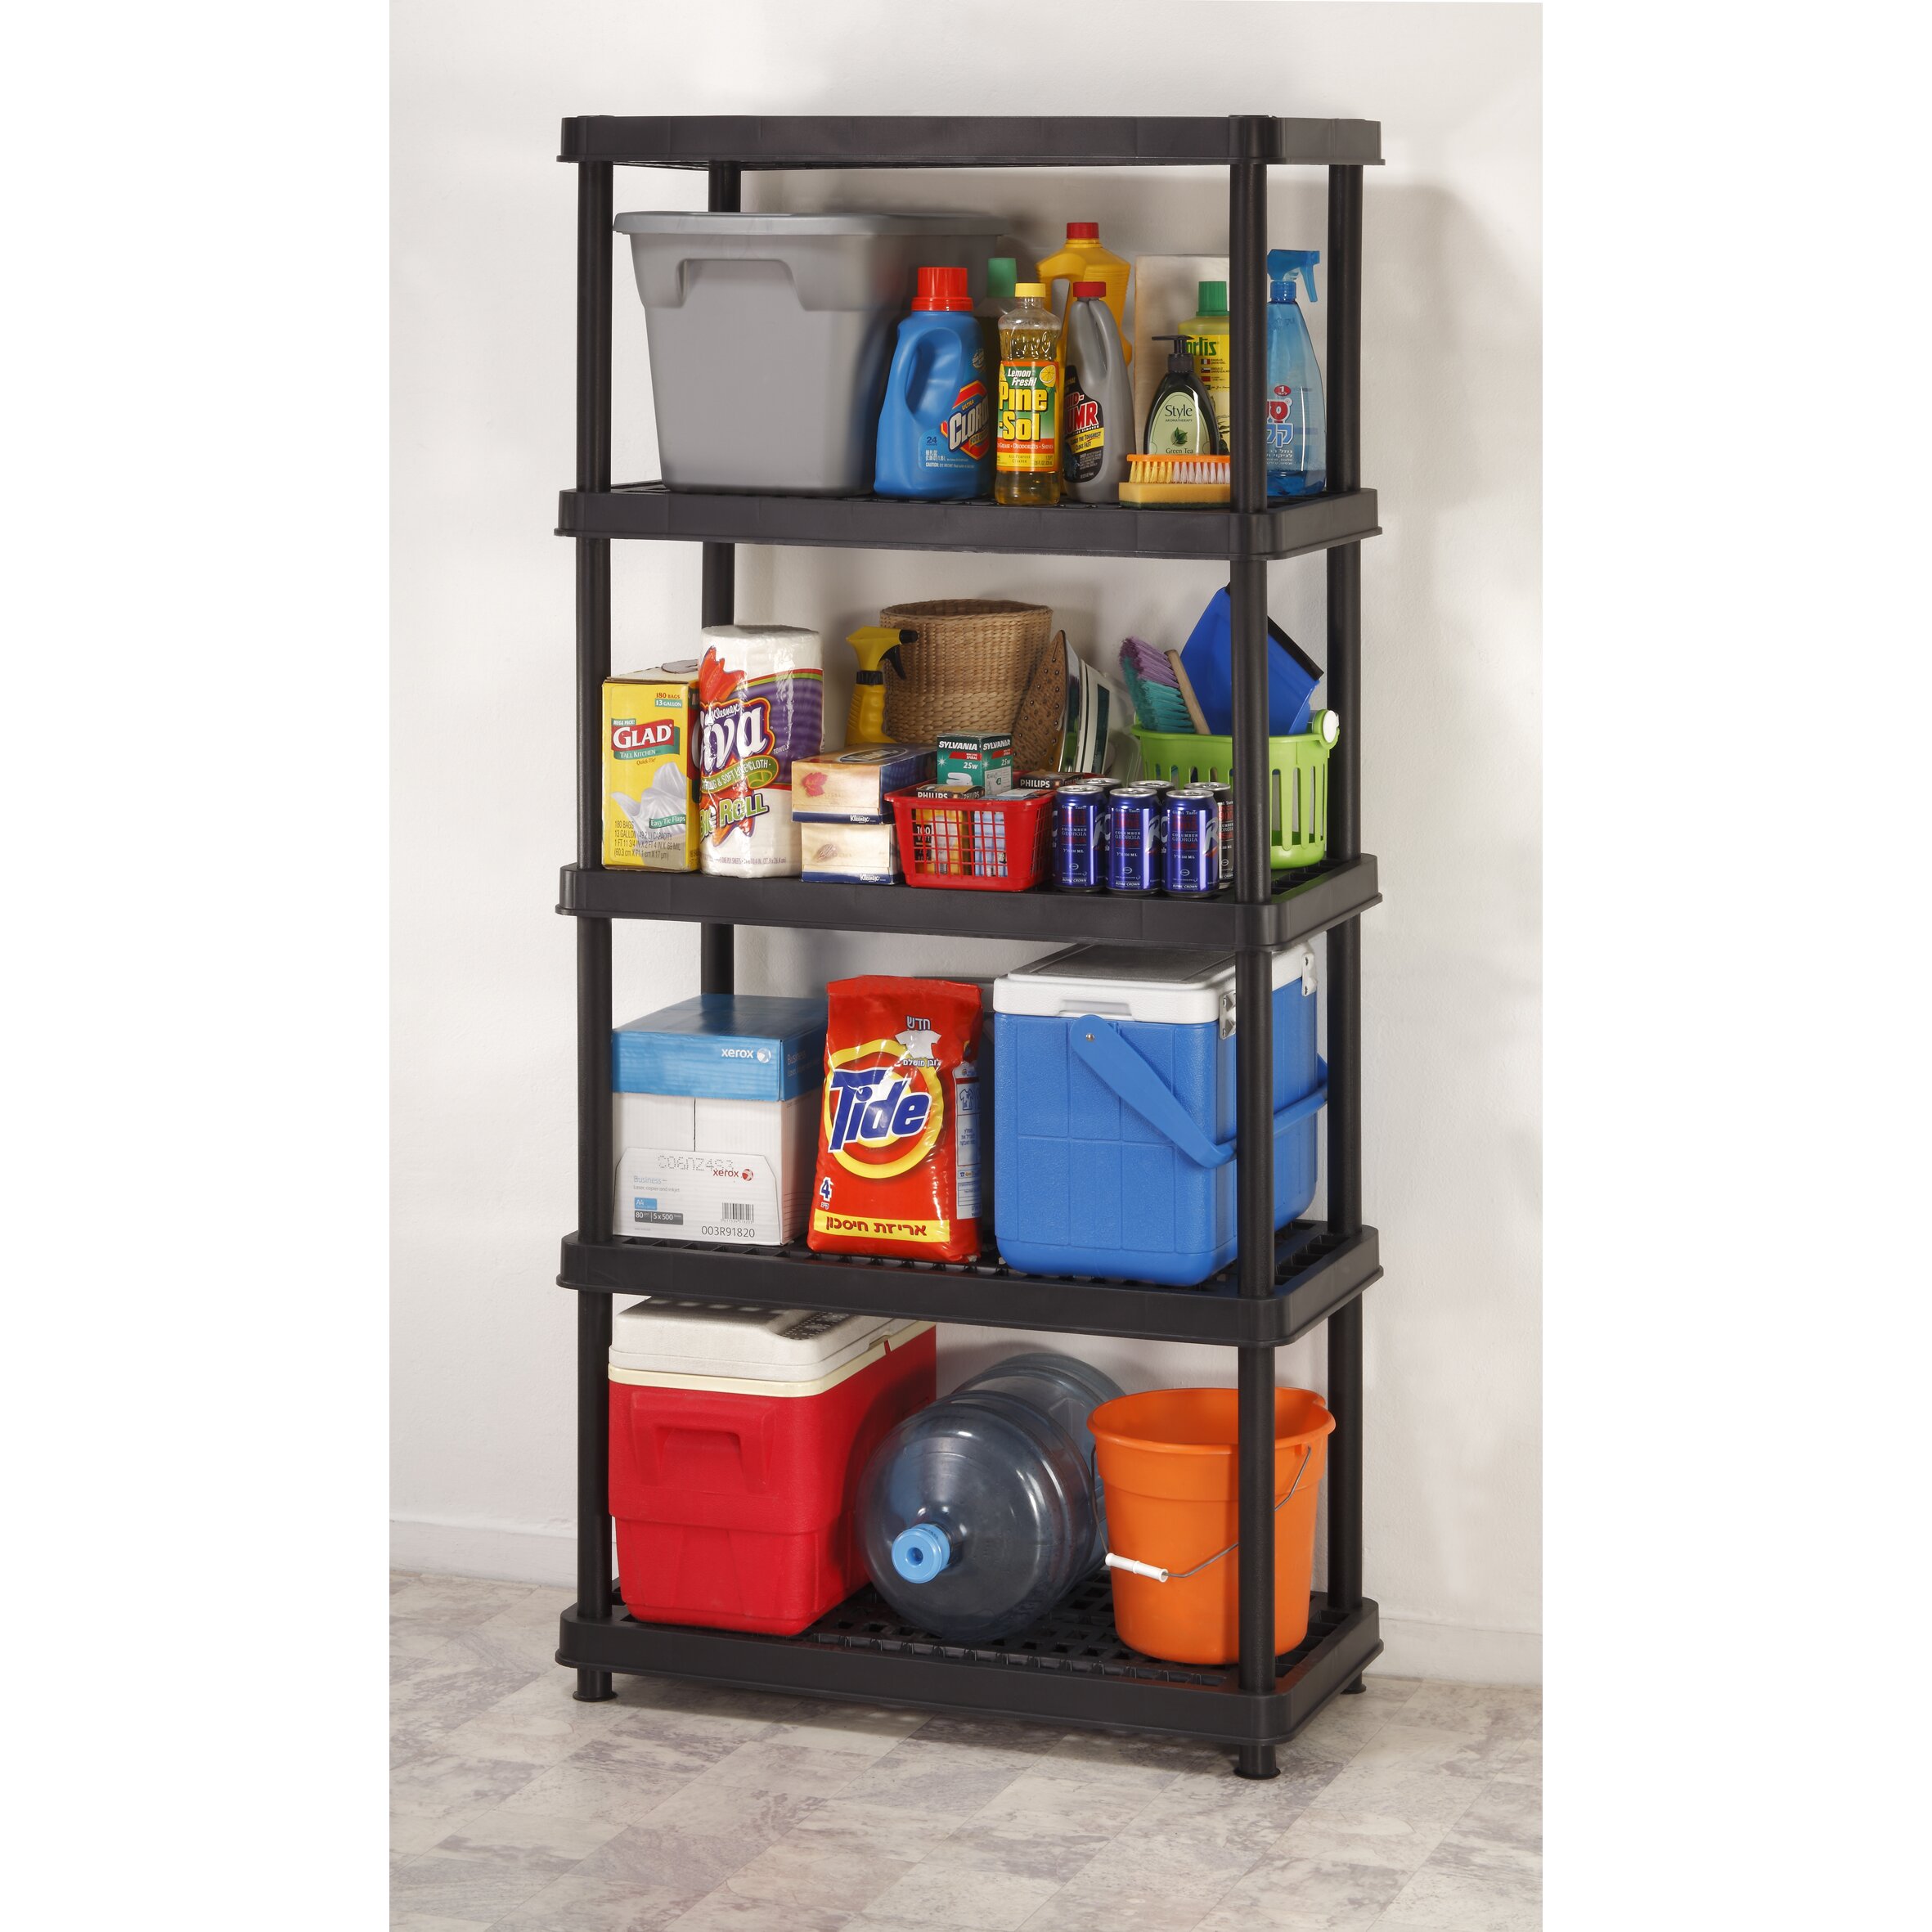 5 Shelf Ventilated Shelving Unit | Wayfair